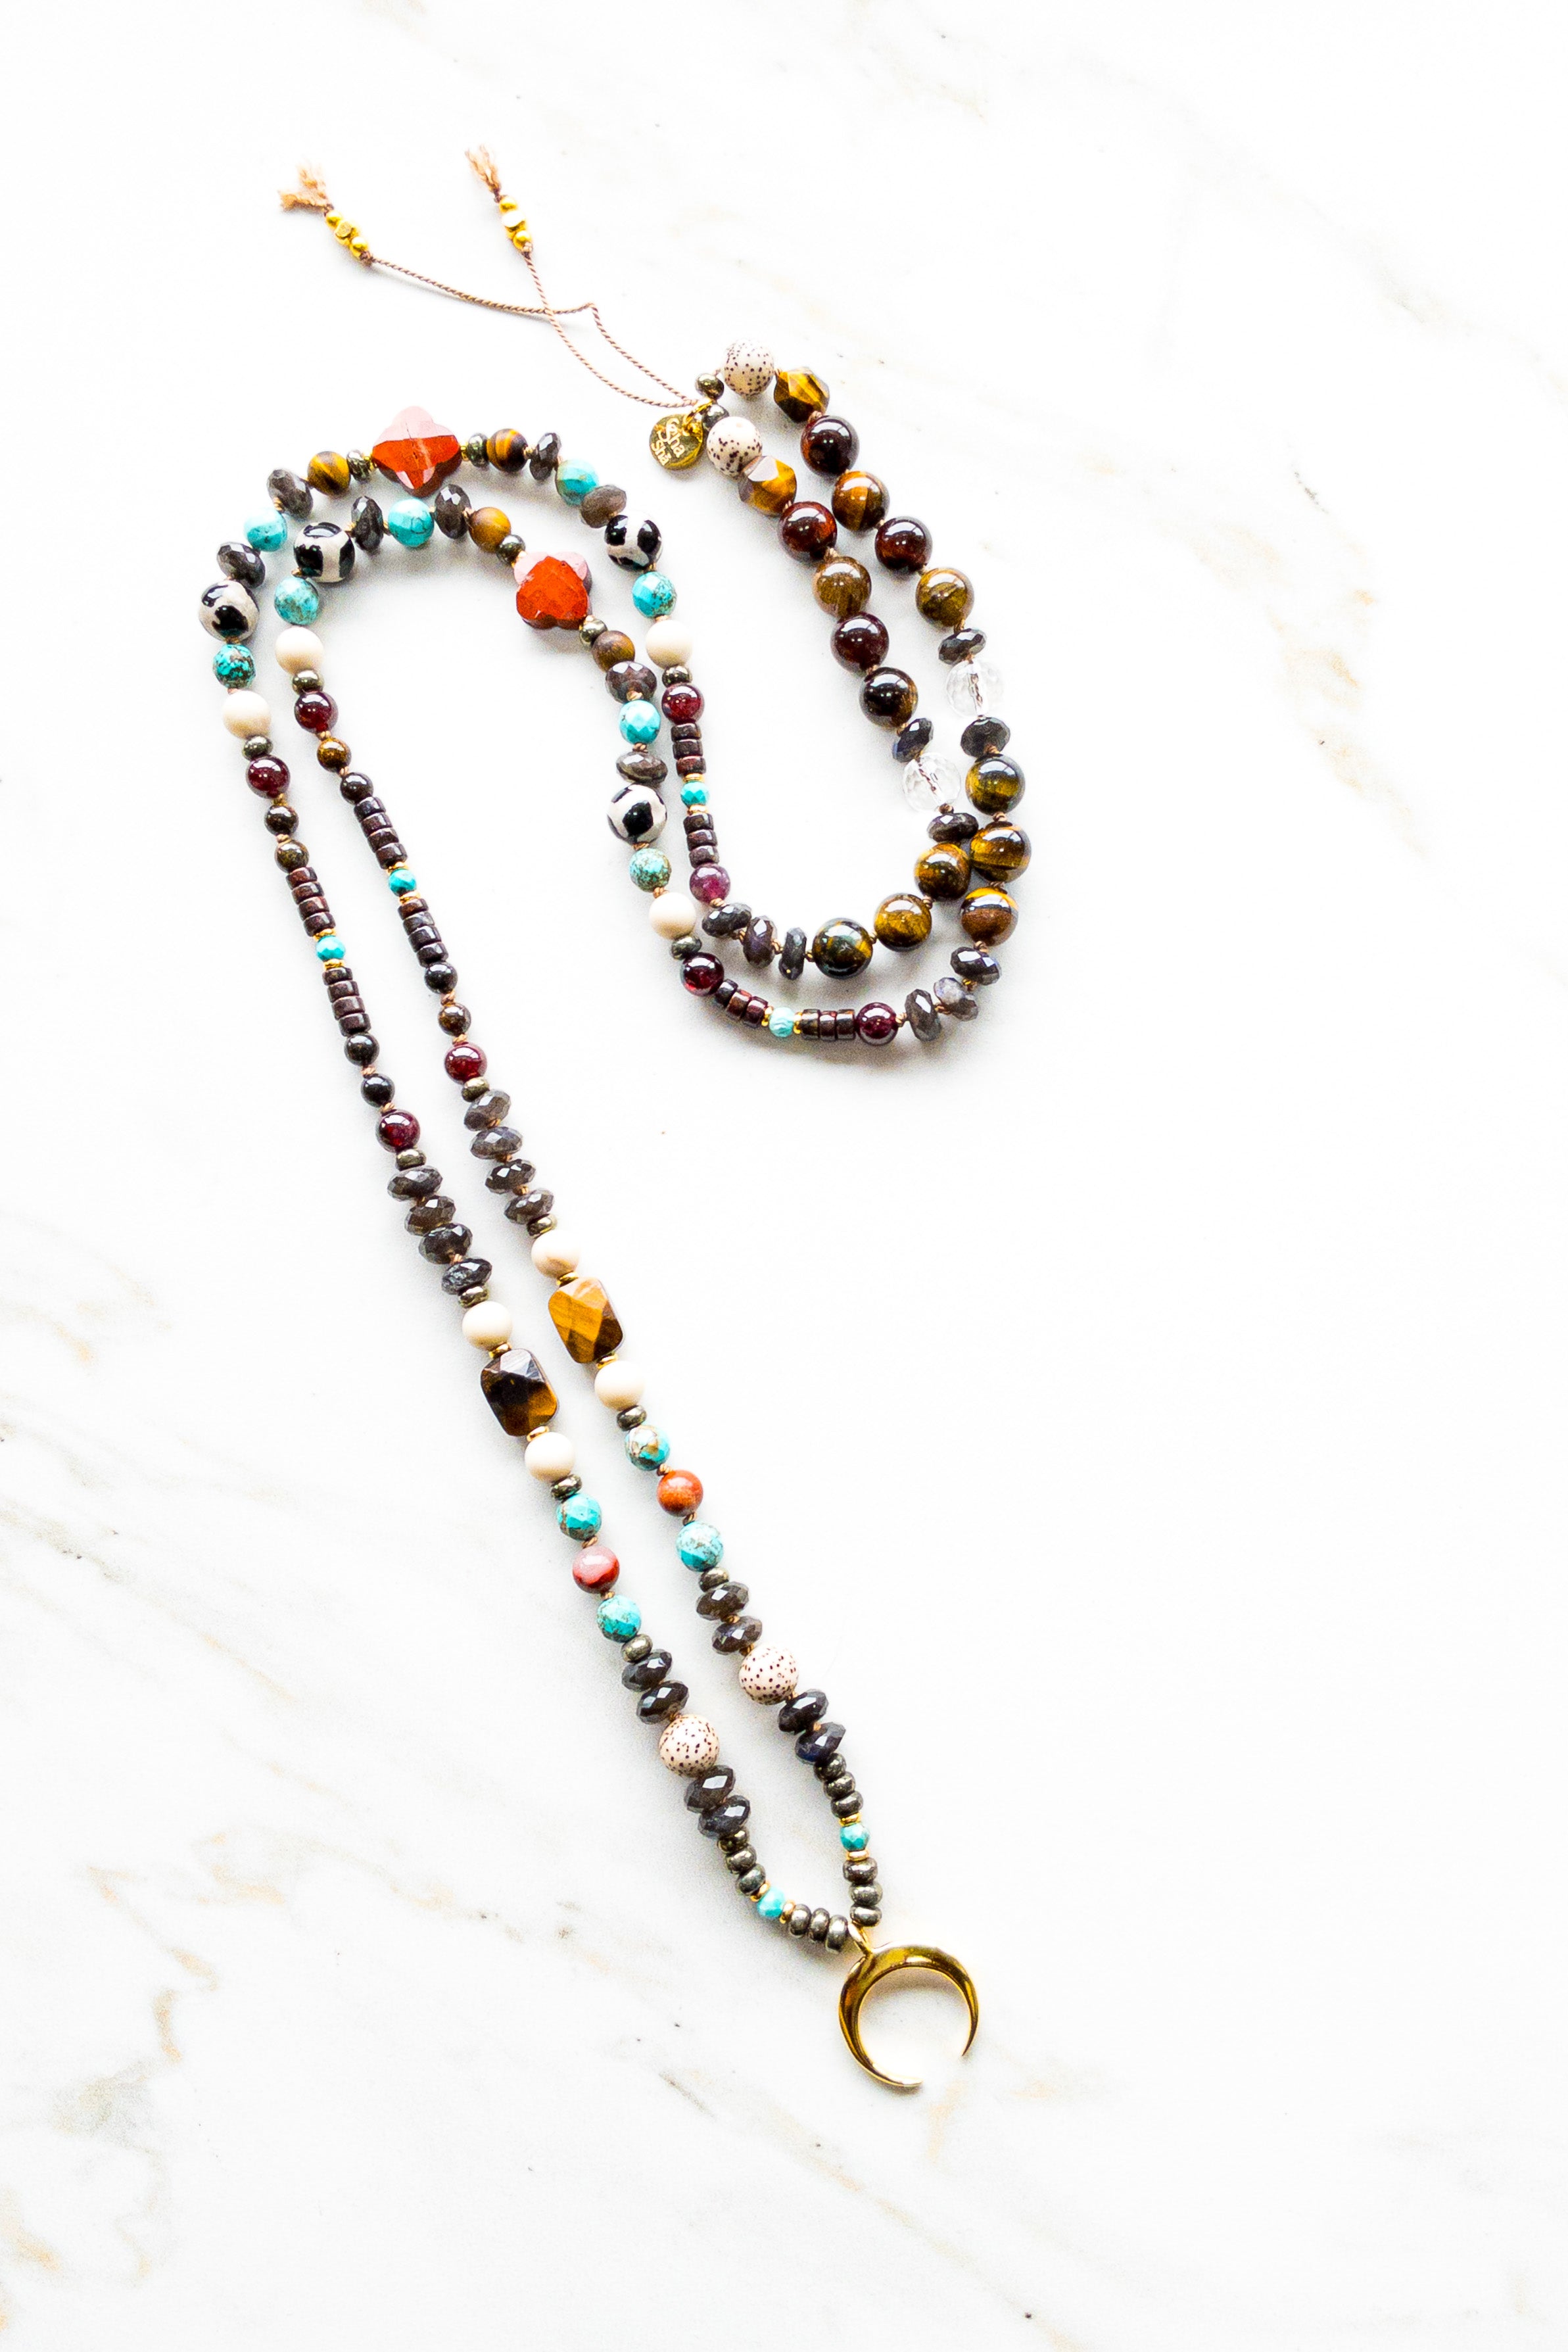 Goddess Mala Necklace: Divine Energy and Serenity - Indradhanush Collection - shashā yoga jewellery 